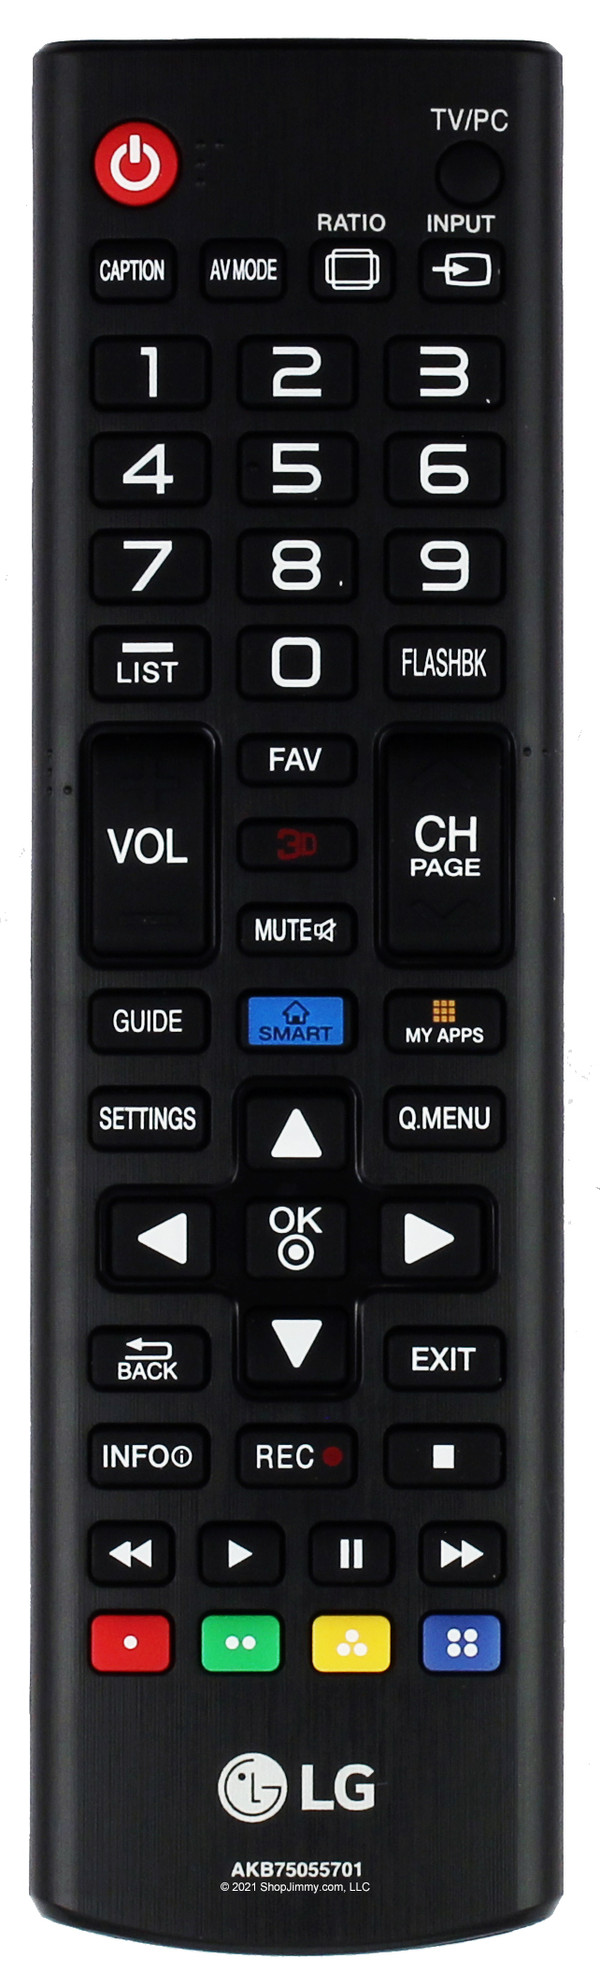 LG AKB75055701 Remote Control - BRAND NEW OEM FACTORY ORIGINAL